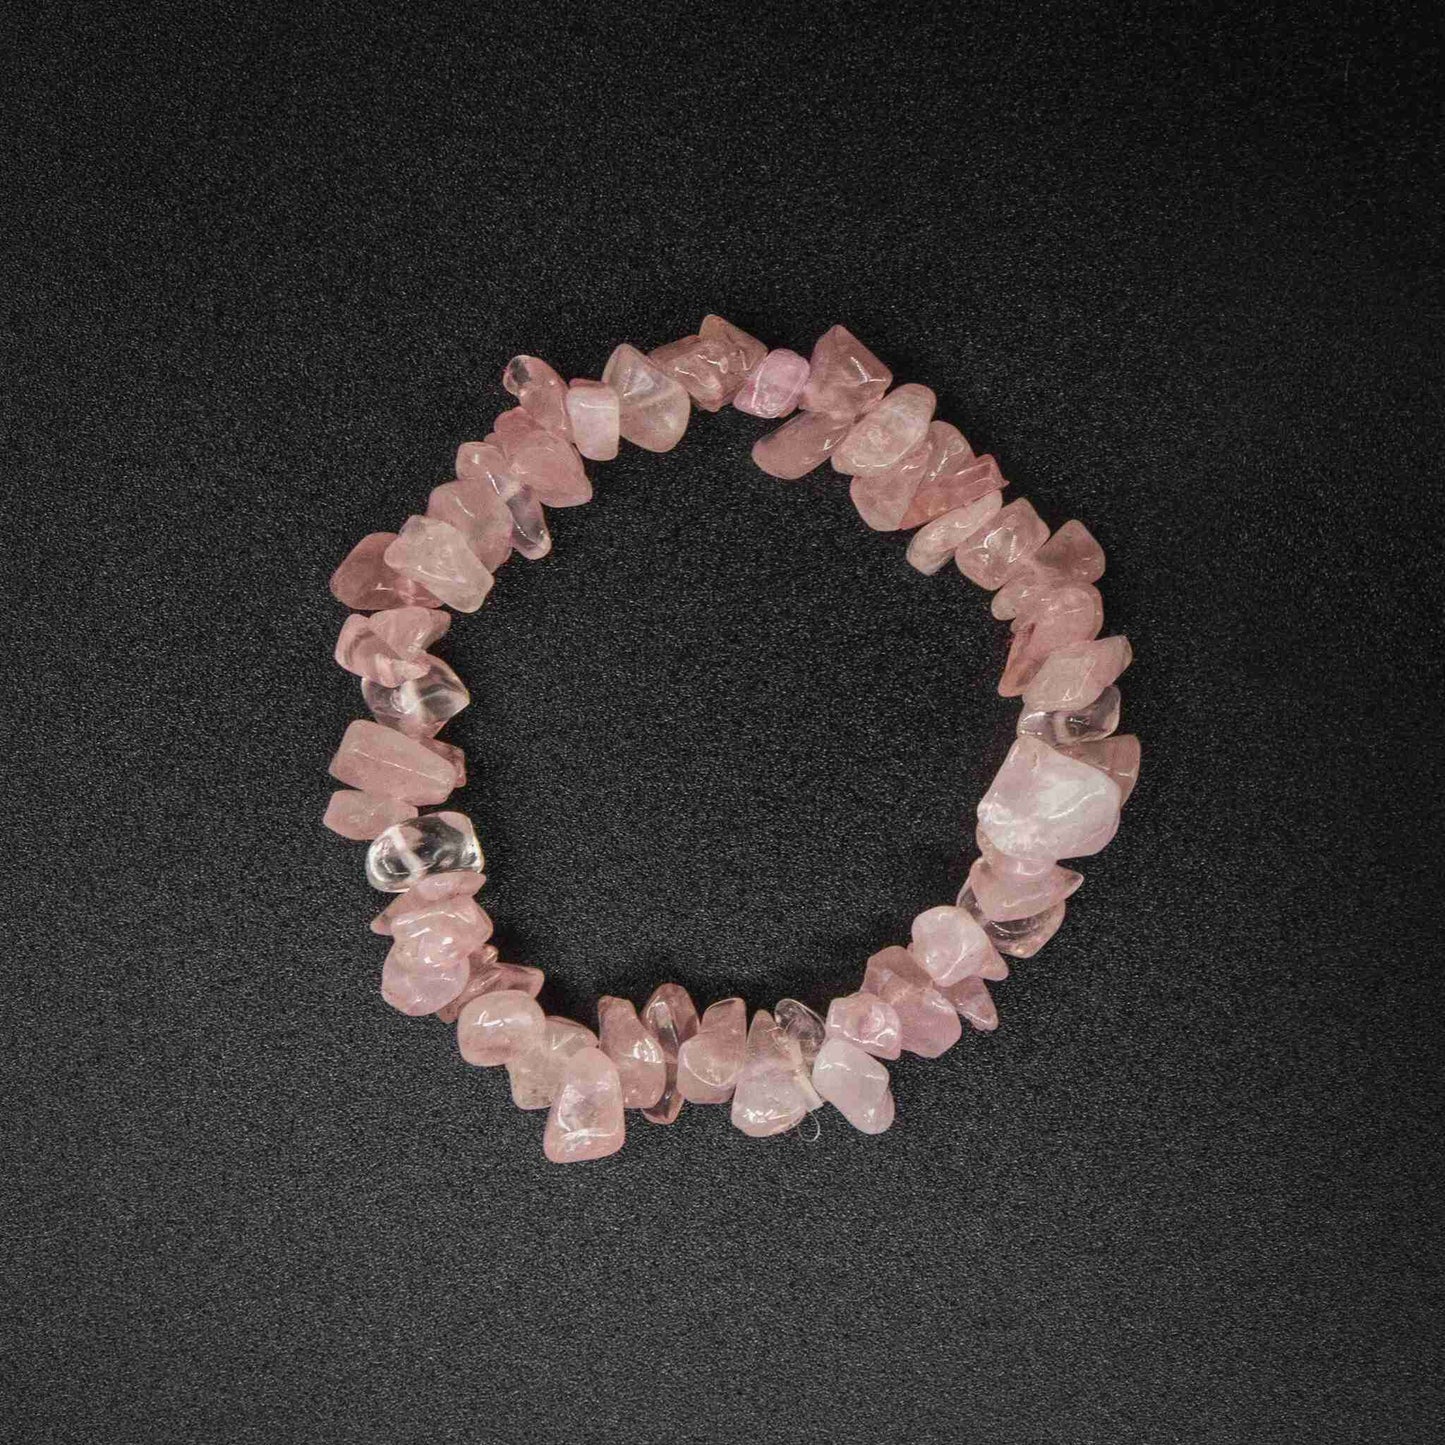 rose quartz handmade bracelet